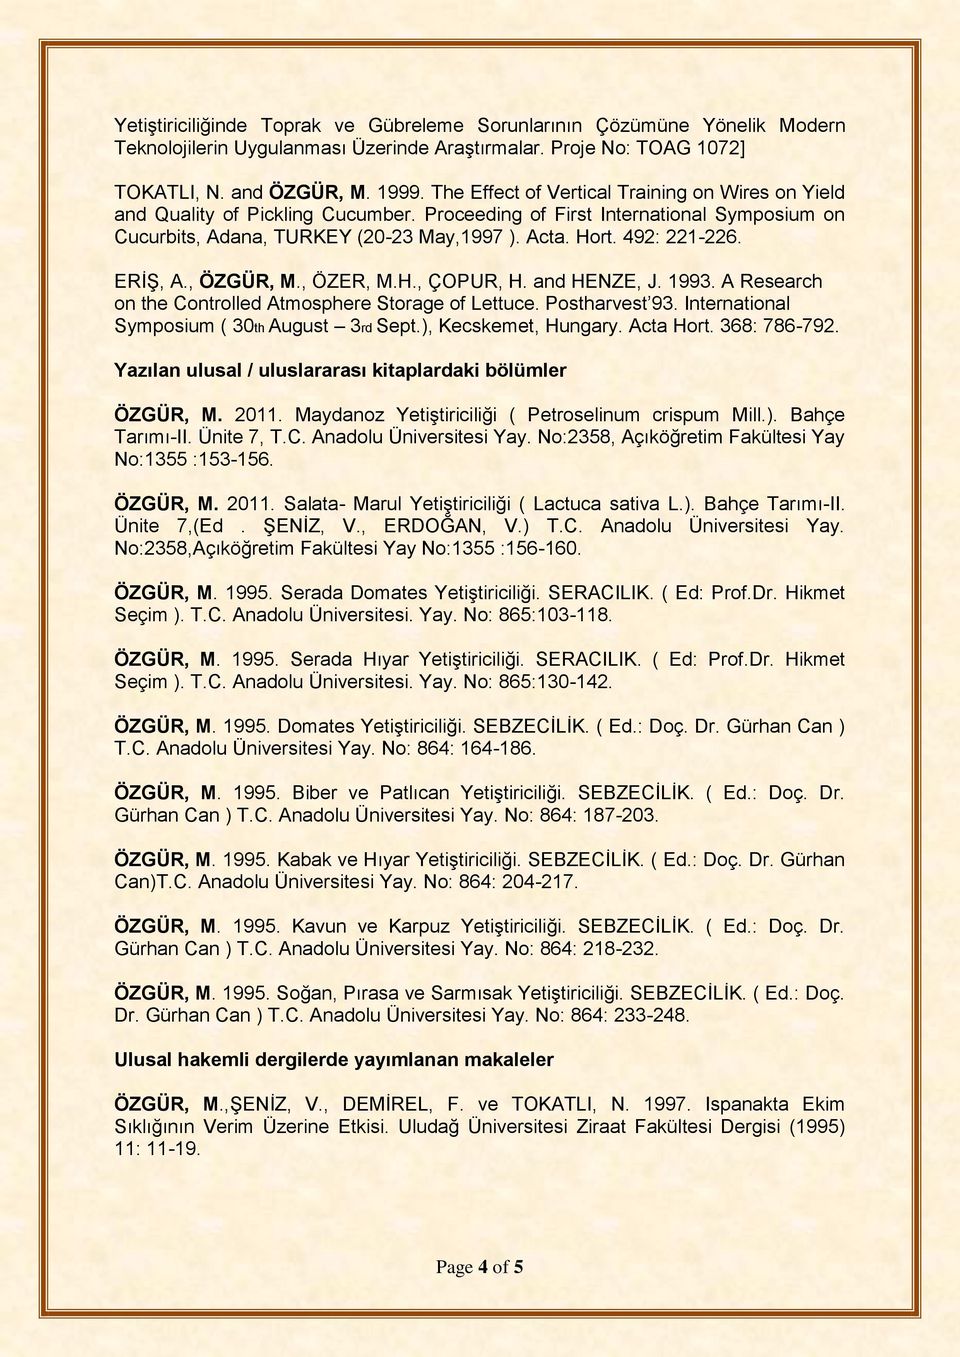 ERİŞ, A., ÖZGÜR, M., ÖZER, M.H., ÇOPUR, H. and HENZE, J. 1993. A Research on the Controlled Atmosphere Storage of Lettuce. Postharvest 93. International Symposium ( 30th August 3rd Sept.